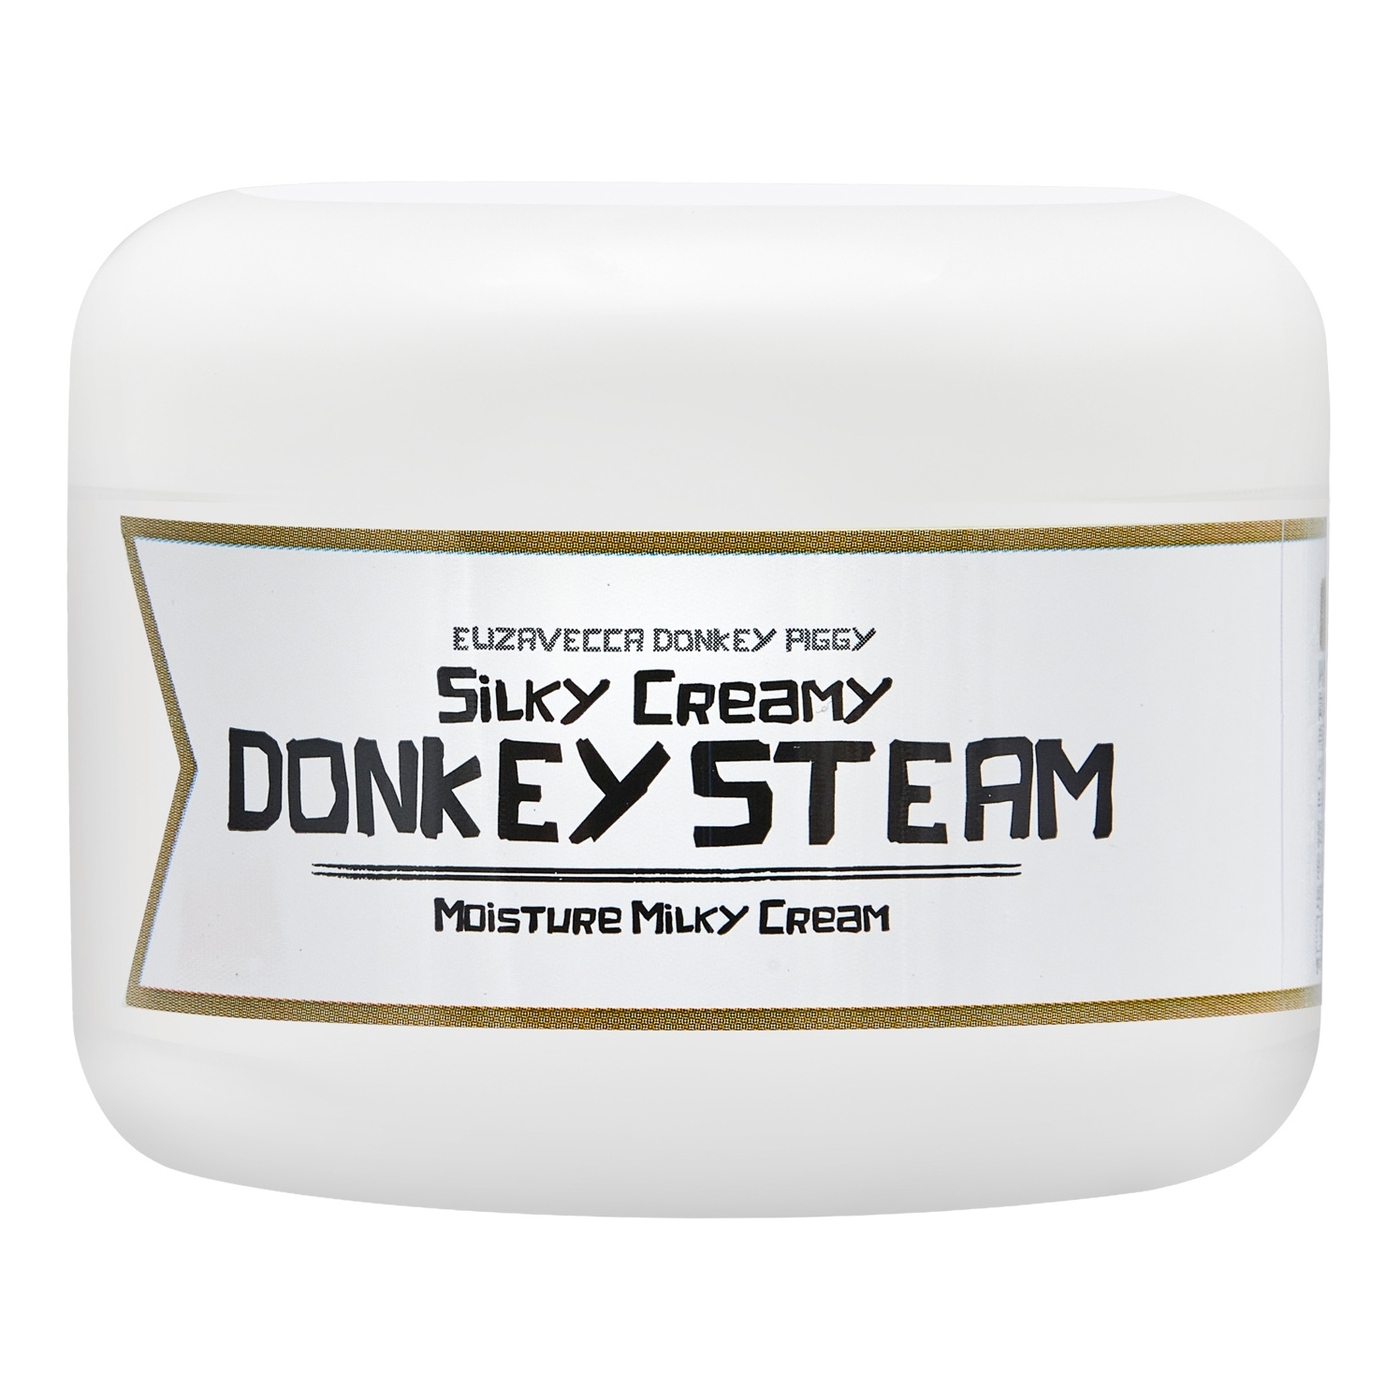 Silky creamy donkey steam moisture milky cream крем фото 28